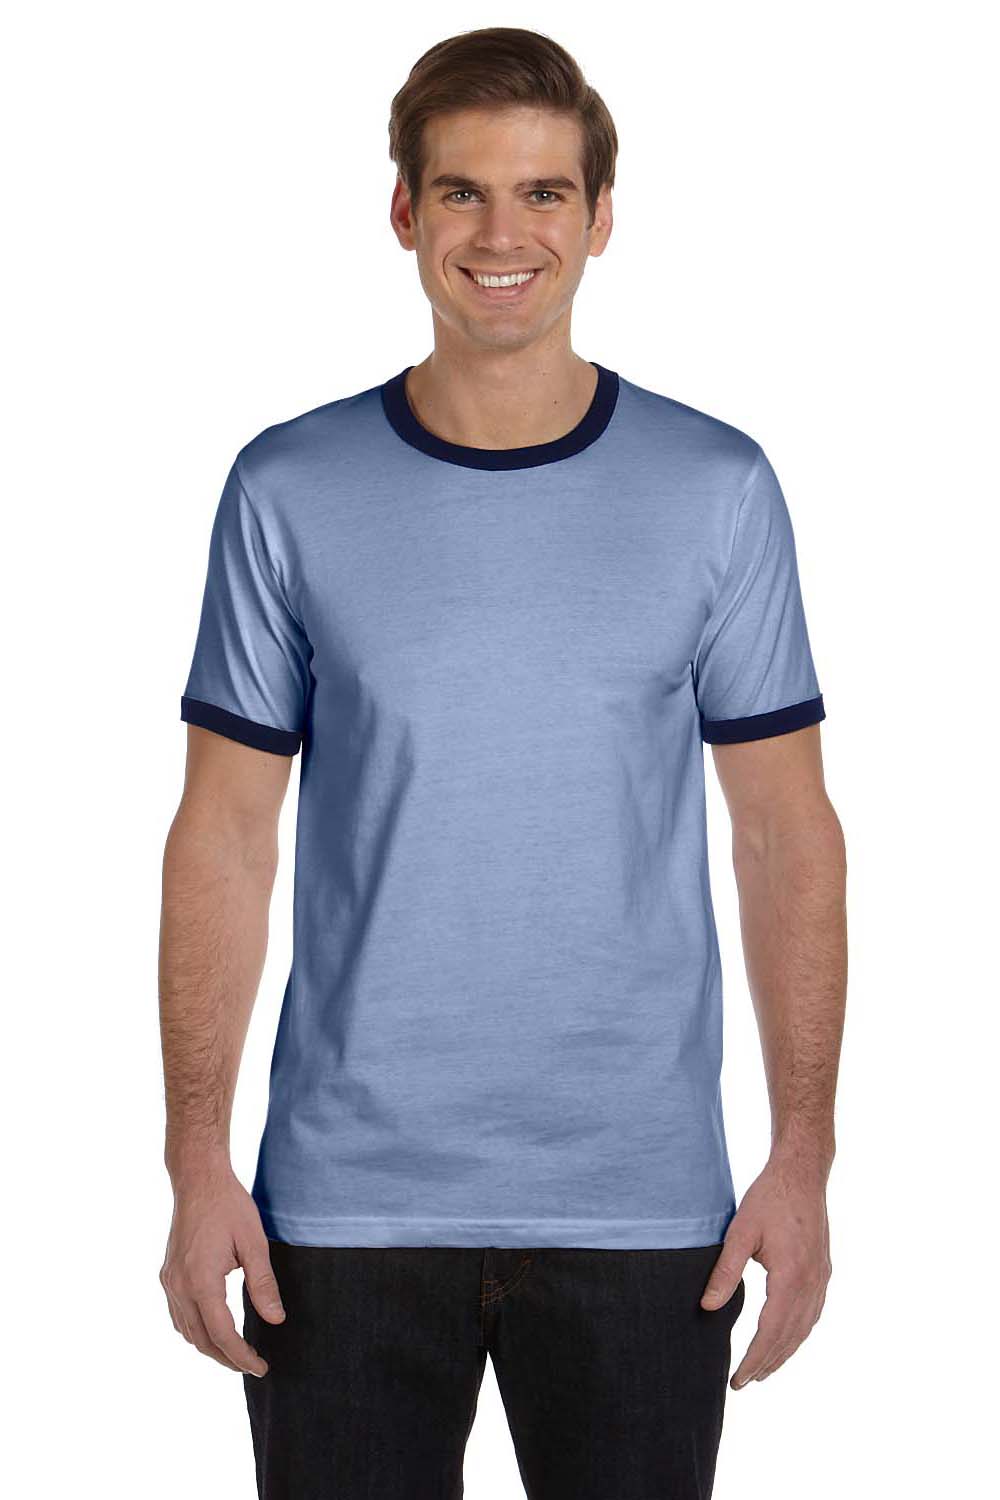 Bella + Canvas 3055C Mens Jersey Ringer Short Sleeve Crewneck T-Shirt Heather Blue/Navy Blue Front